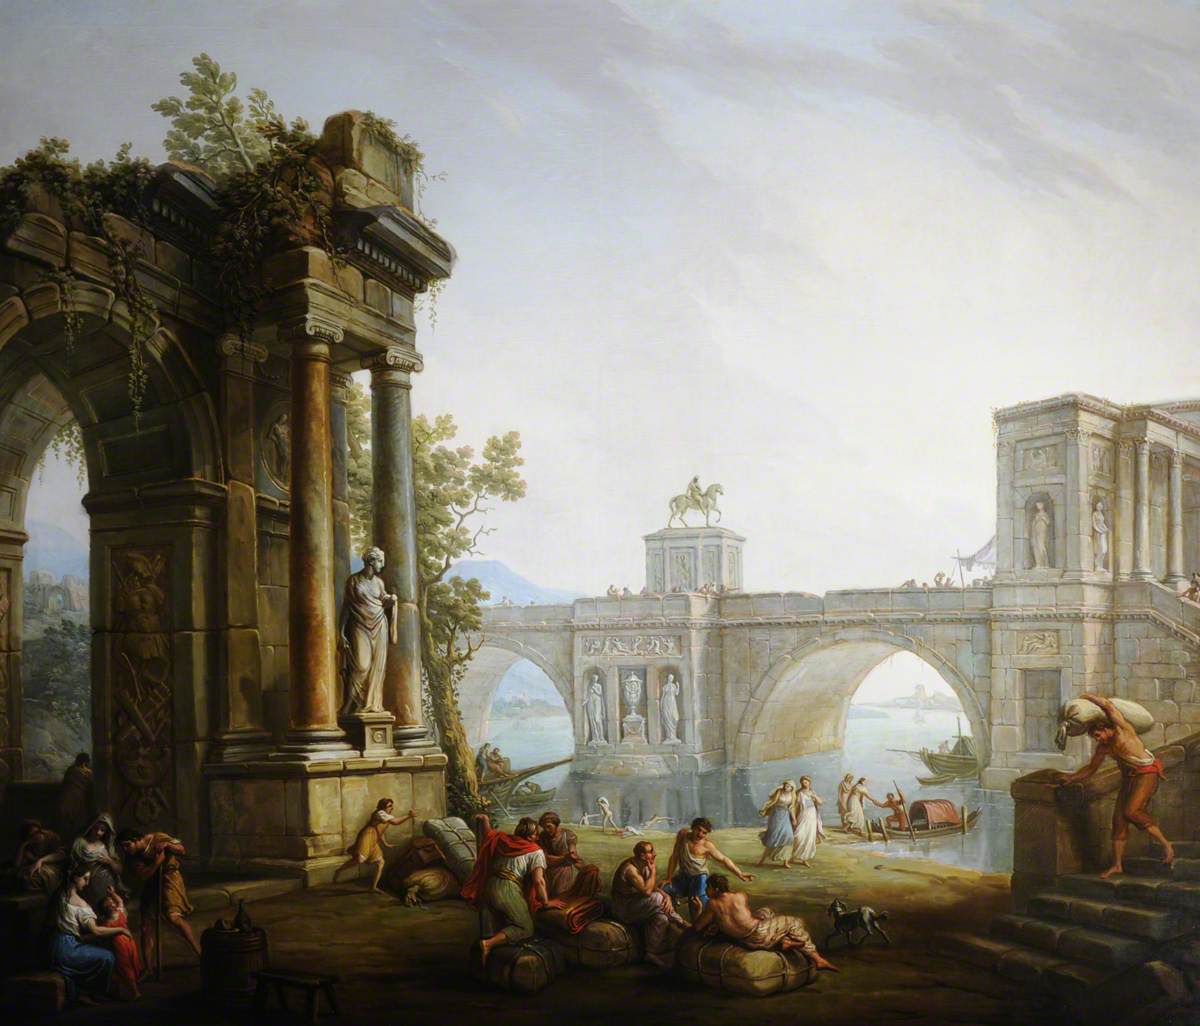 Capriccio with the Ruins of a Triumphal Arch and a Bridge